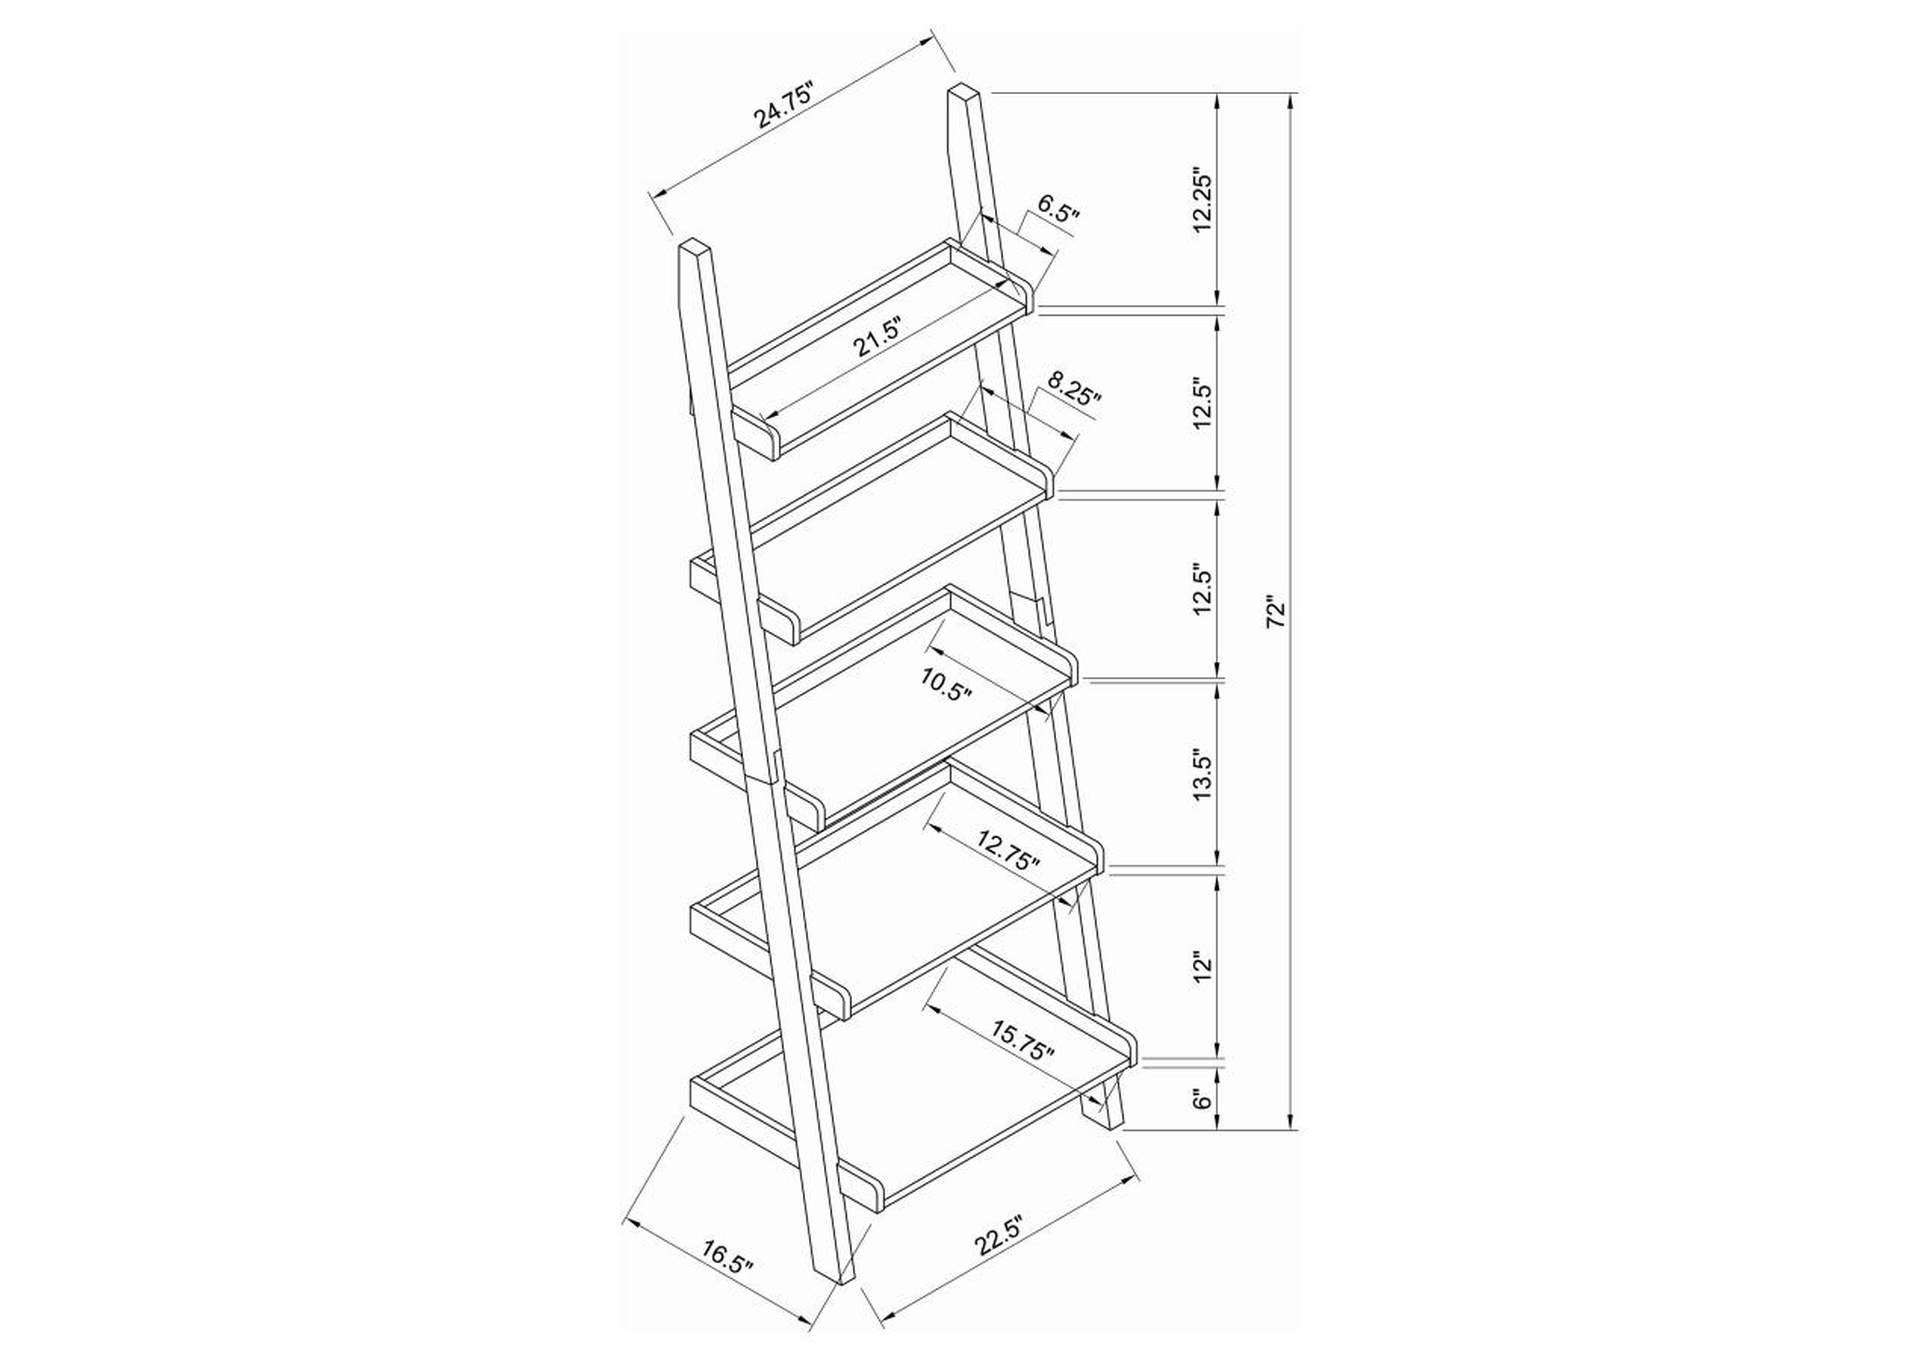 Bower 5-shelf Ladder Bookcase Cappuccino,Coaster Furniture